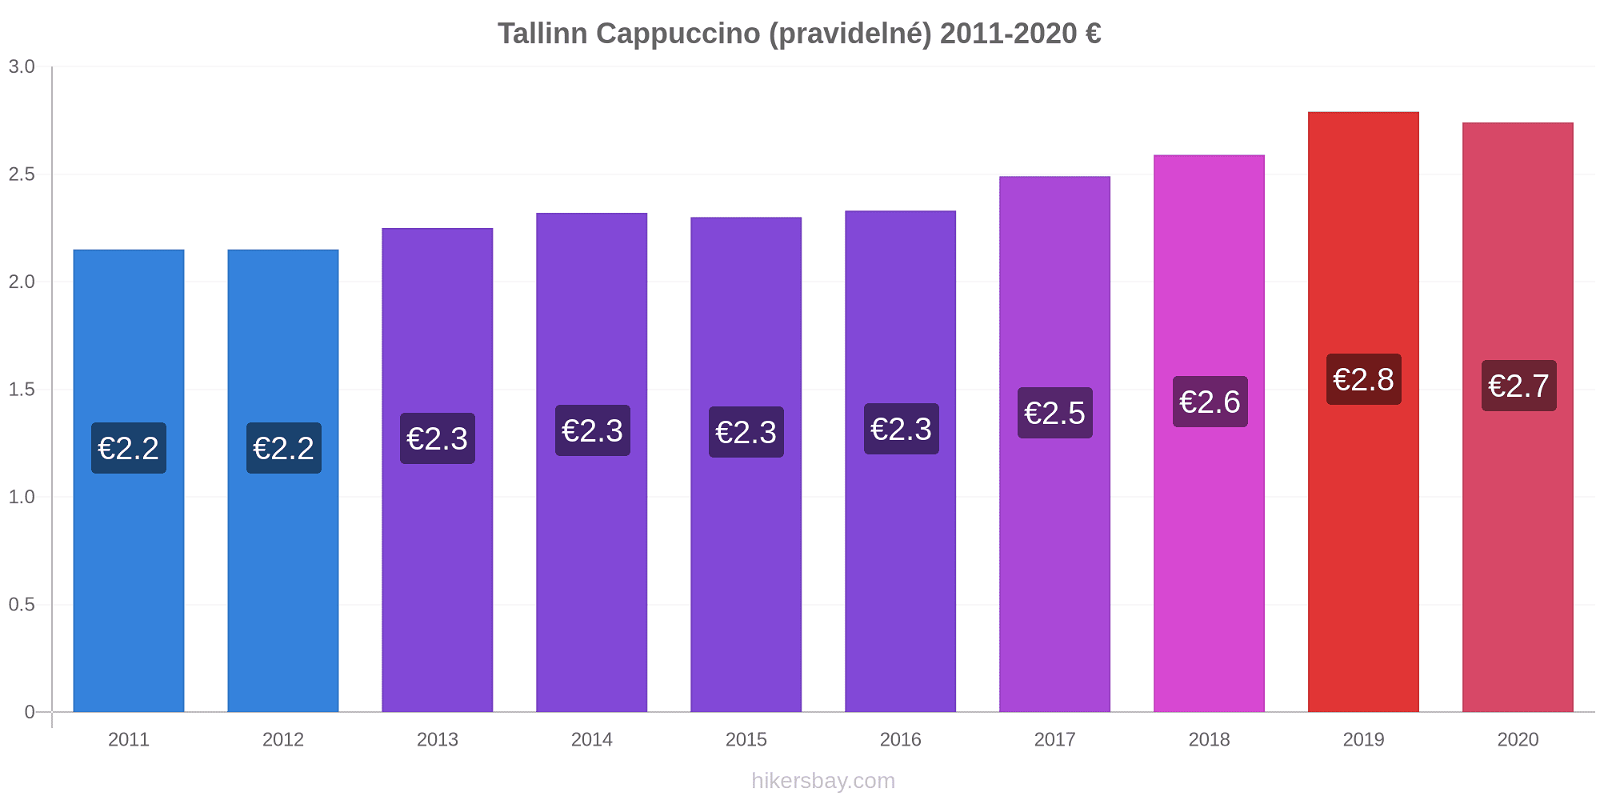 Tallinn změny cen Cappuccino (pravidelné) hikersbay.com